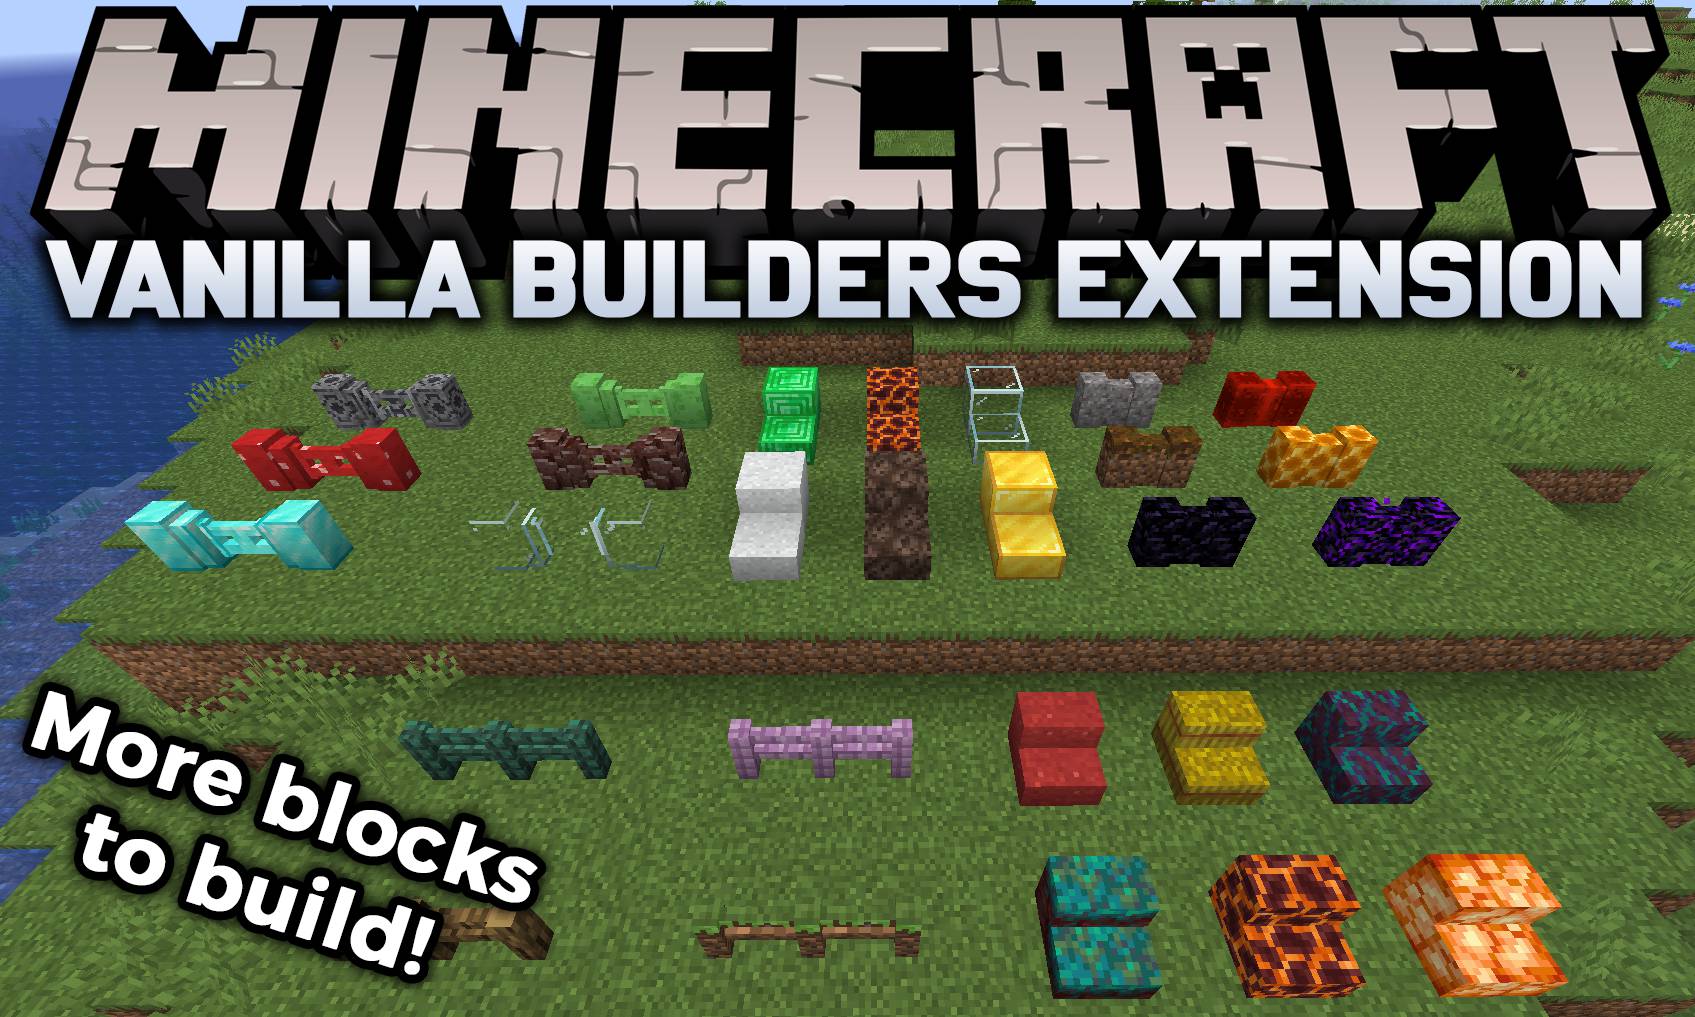 Vanilla Builders Extension mod for minecraft logo